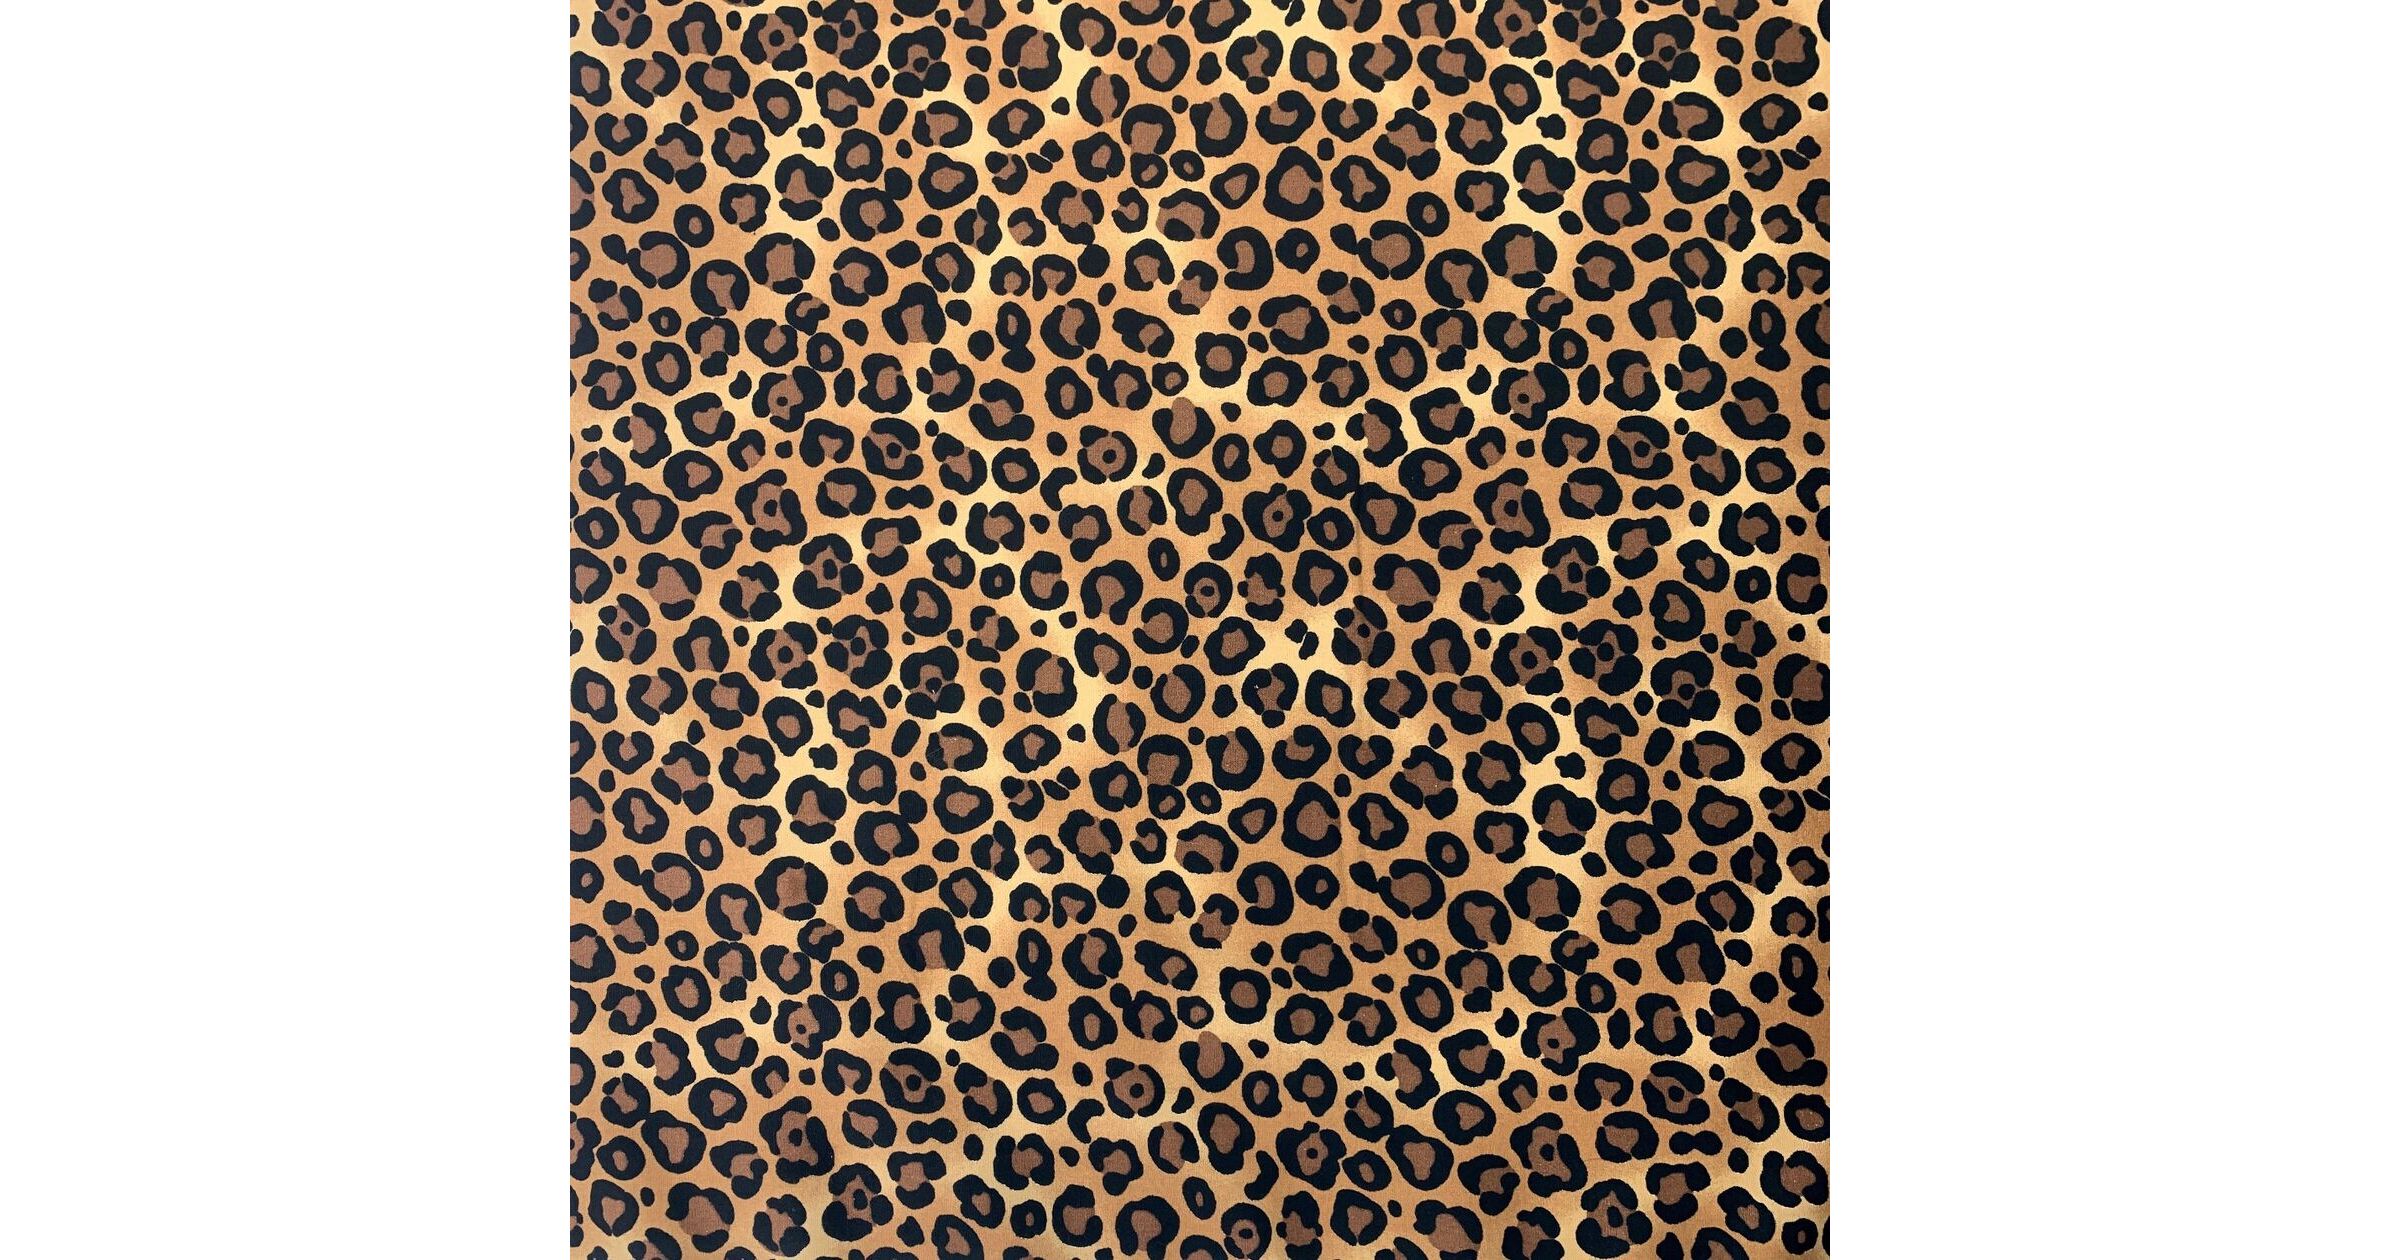 Animal Print Cotton Poplin Fabric | Poplin Print - Baby Leopard